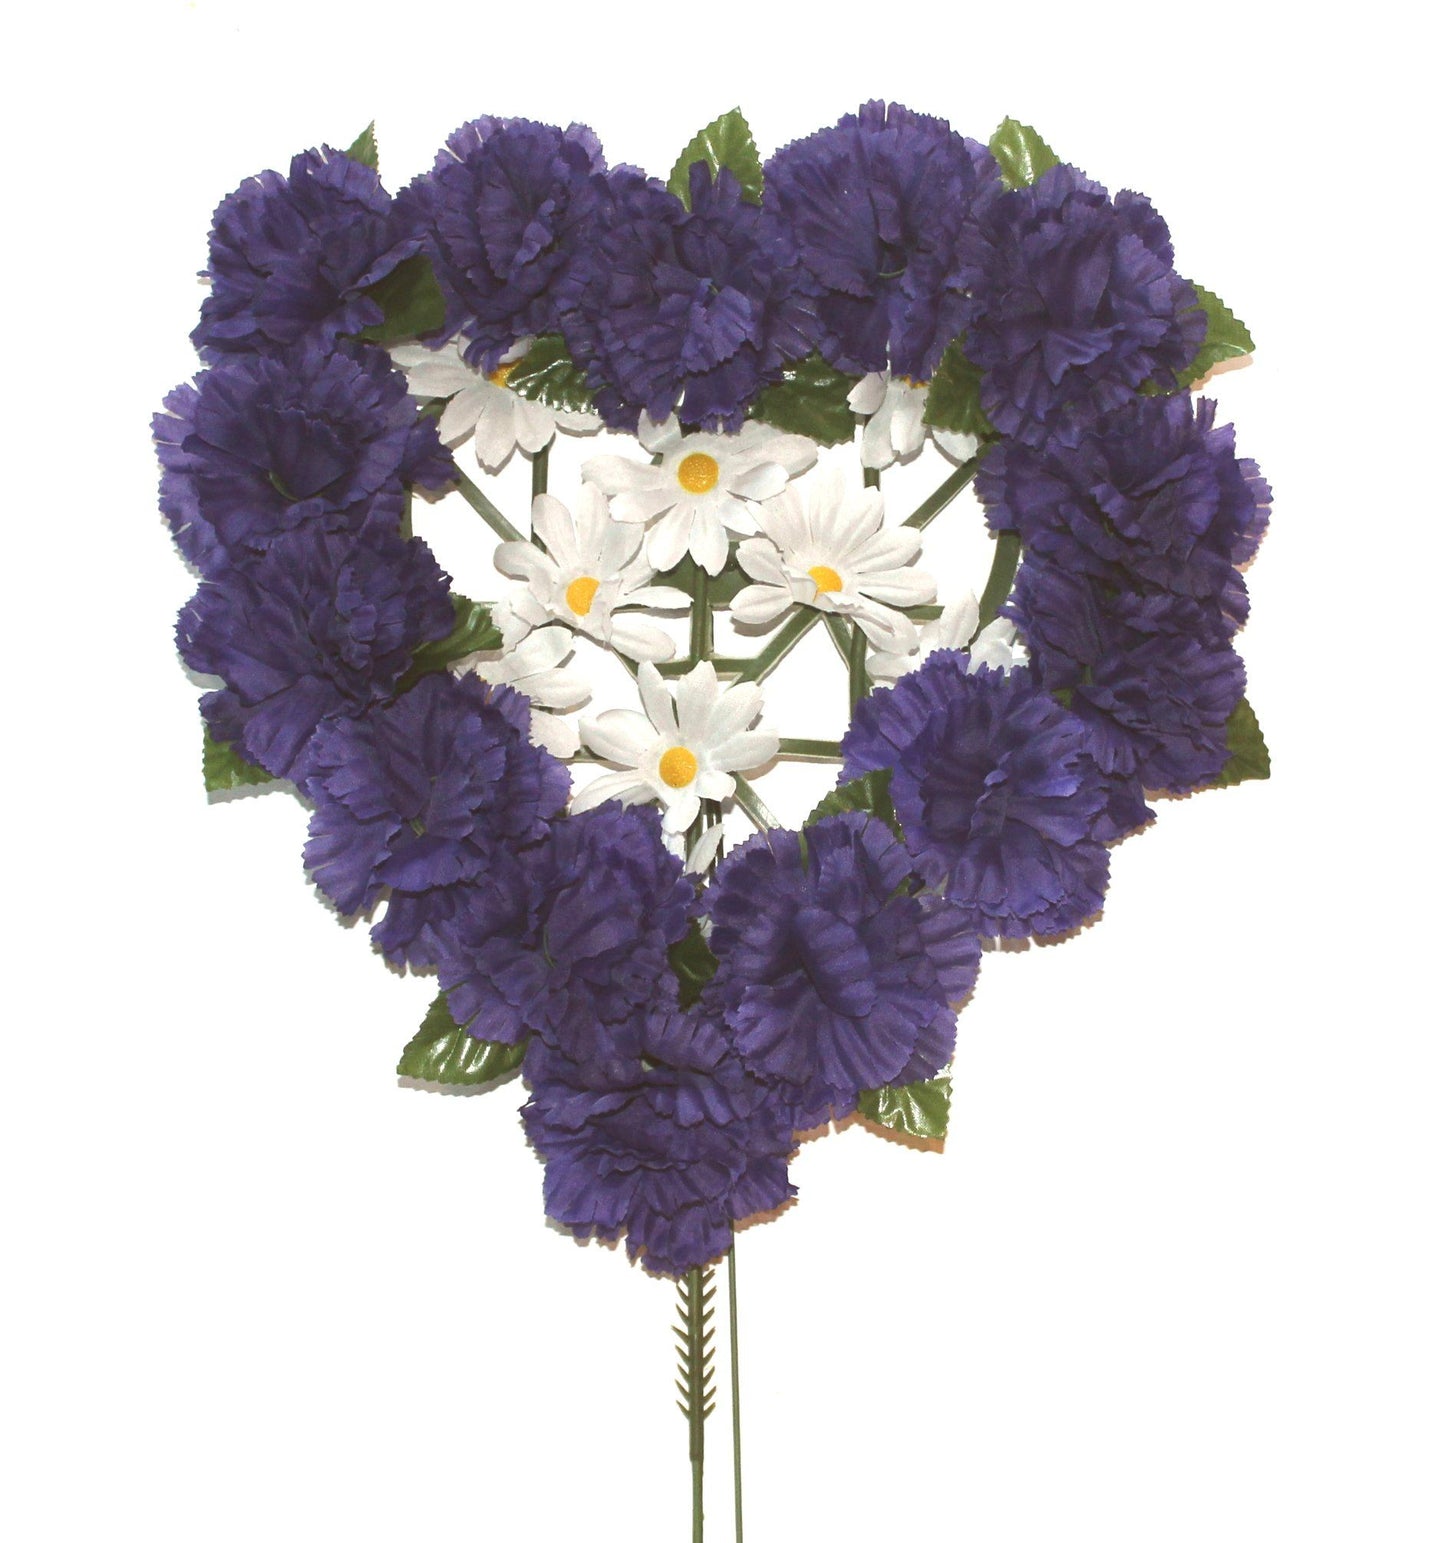 Purple Heart Shaped Flowered Wreath Pillow